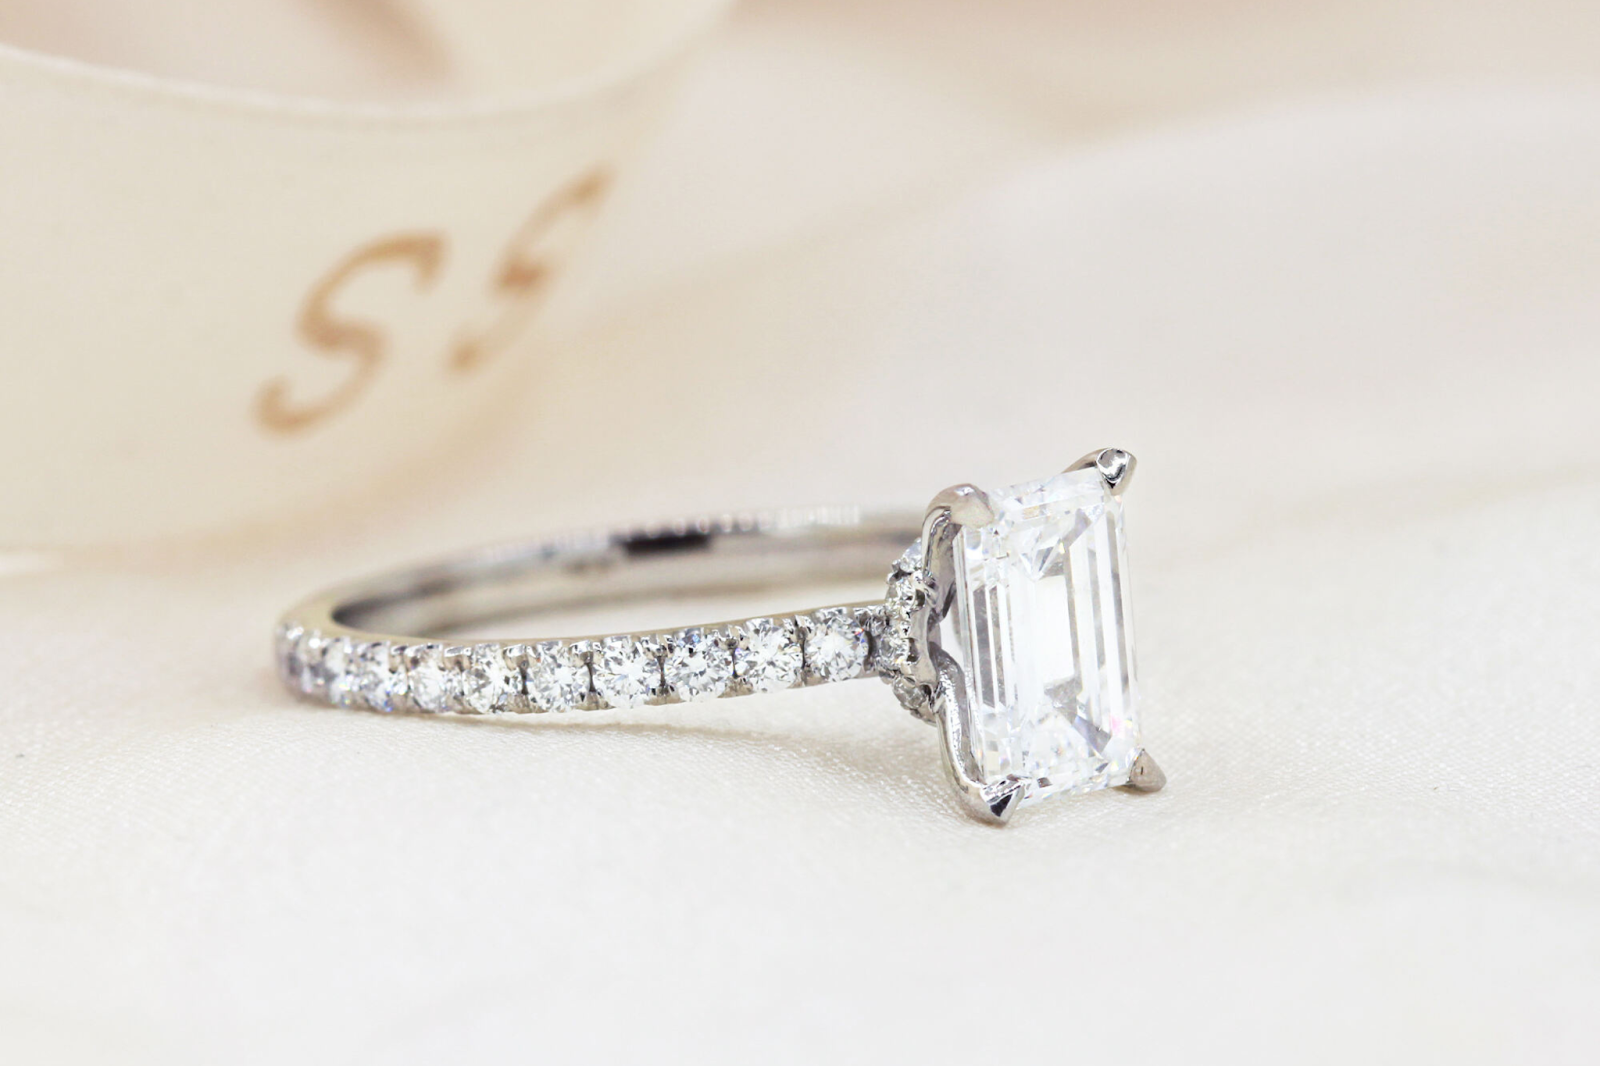 Why choosing 3 carat emerald cut diamond